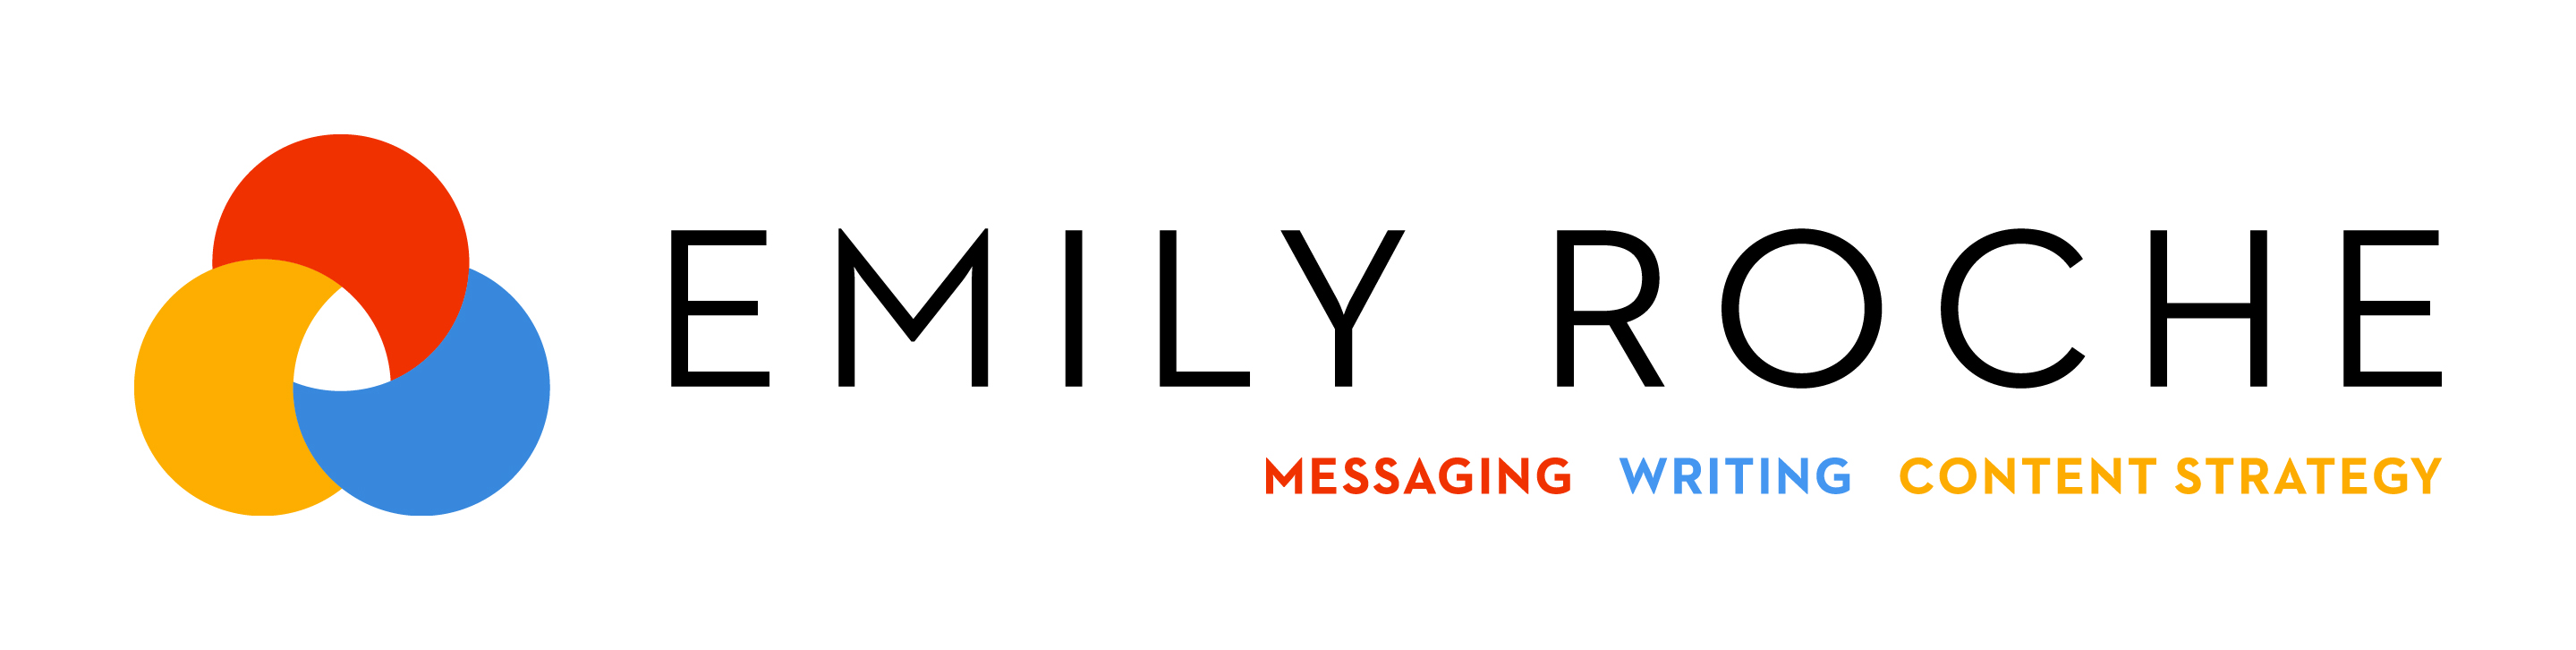 Emily Roche logo